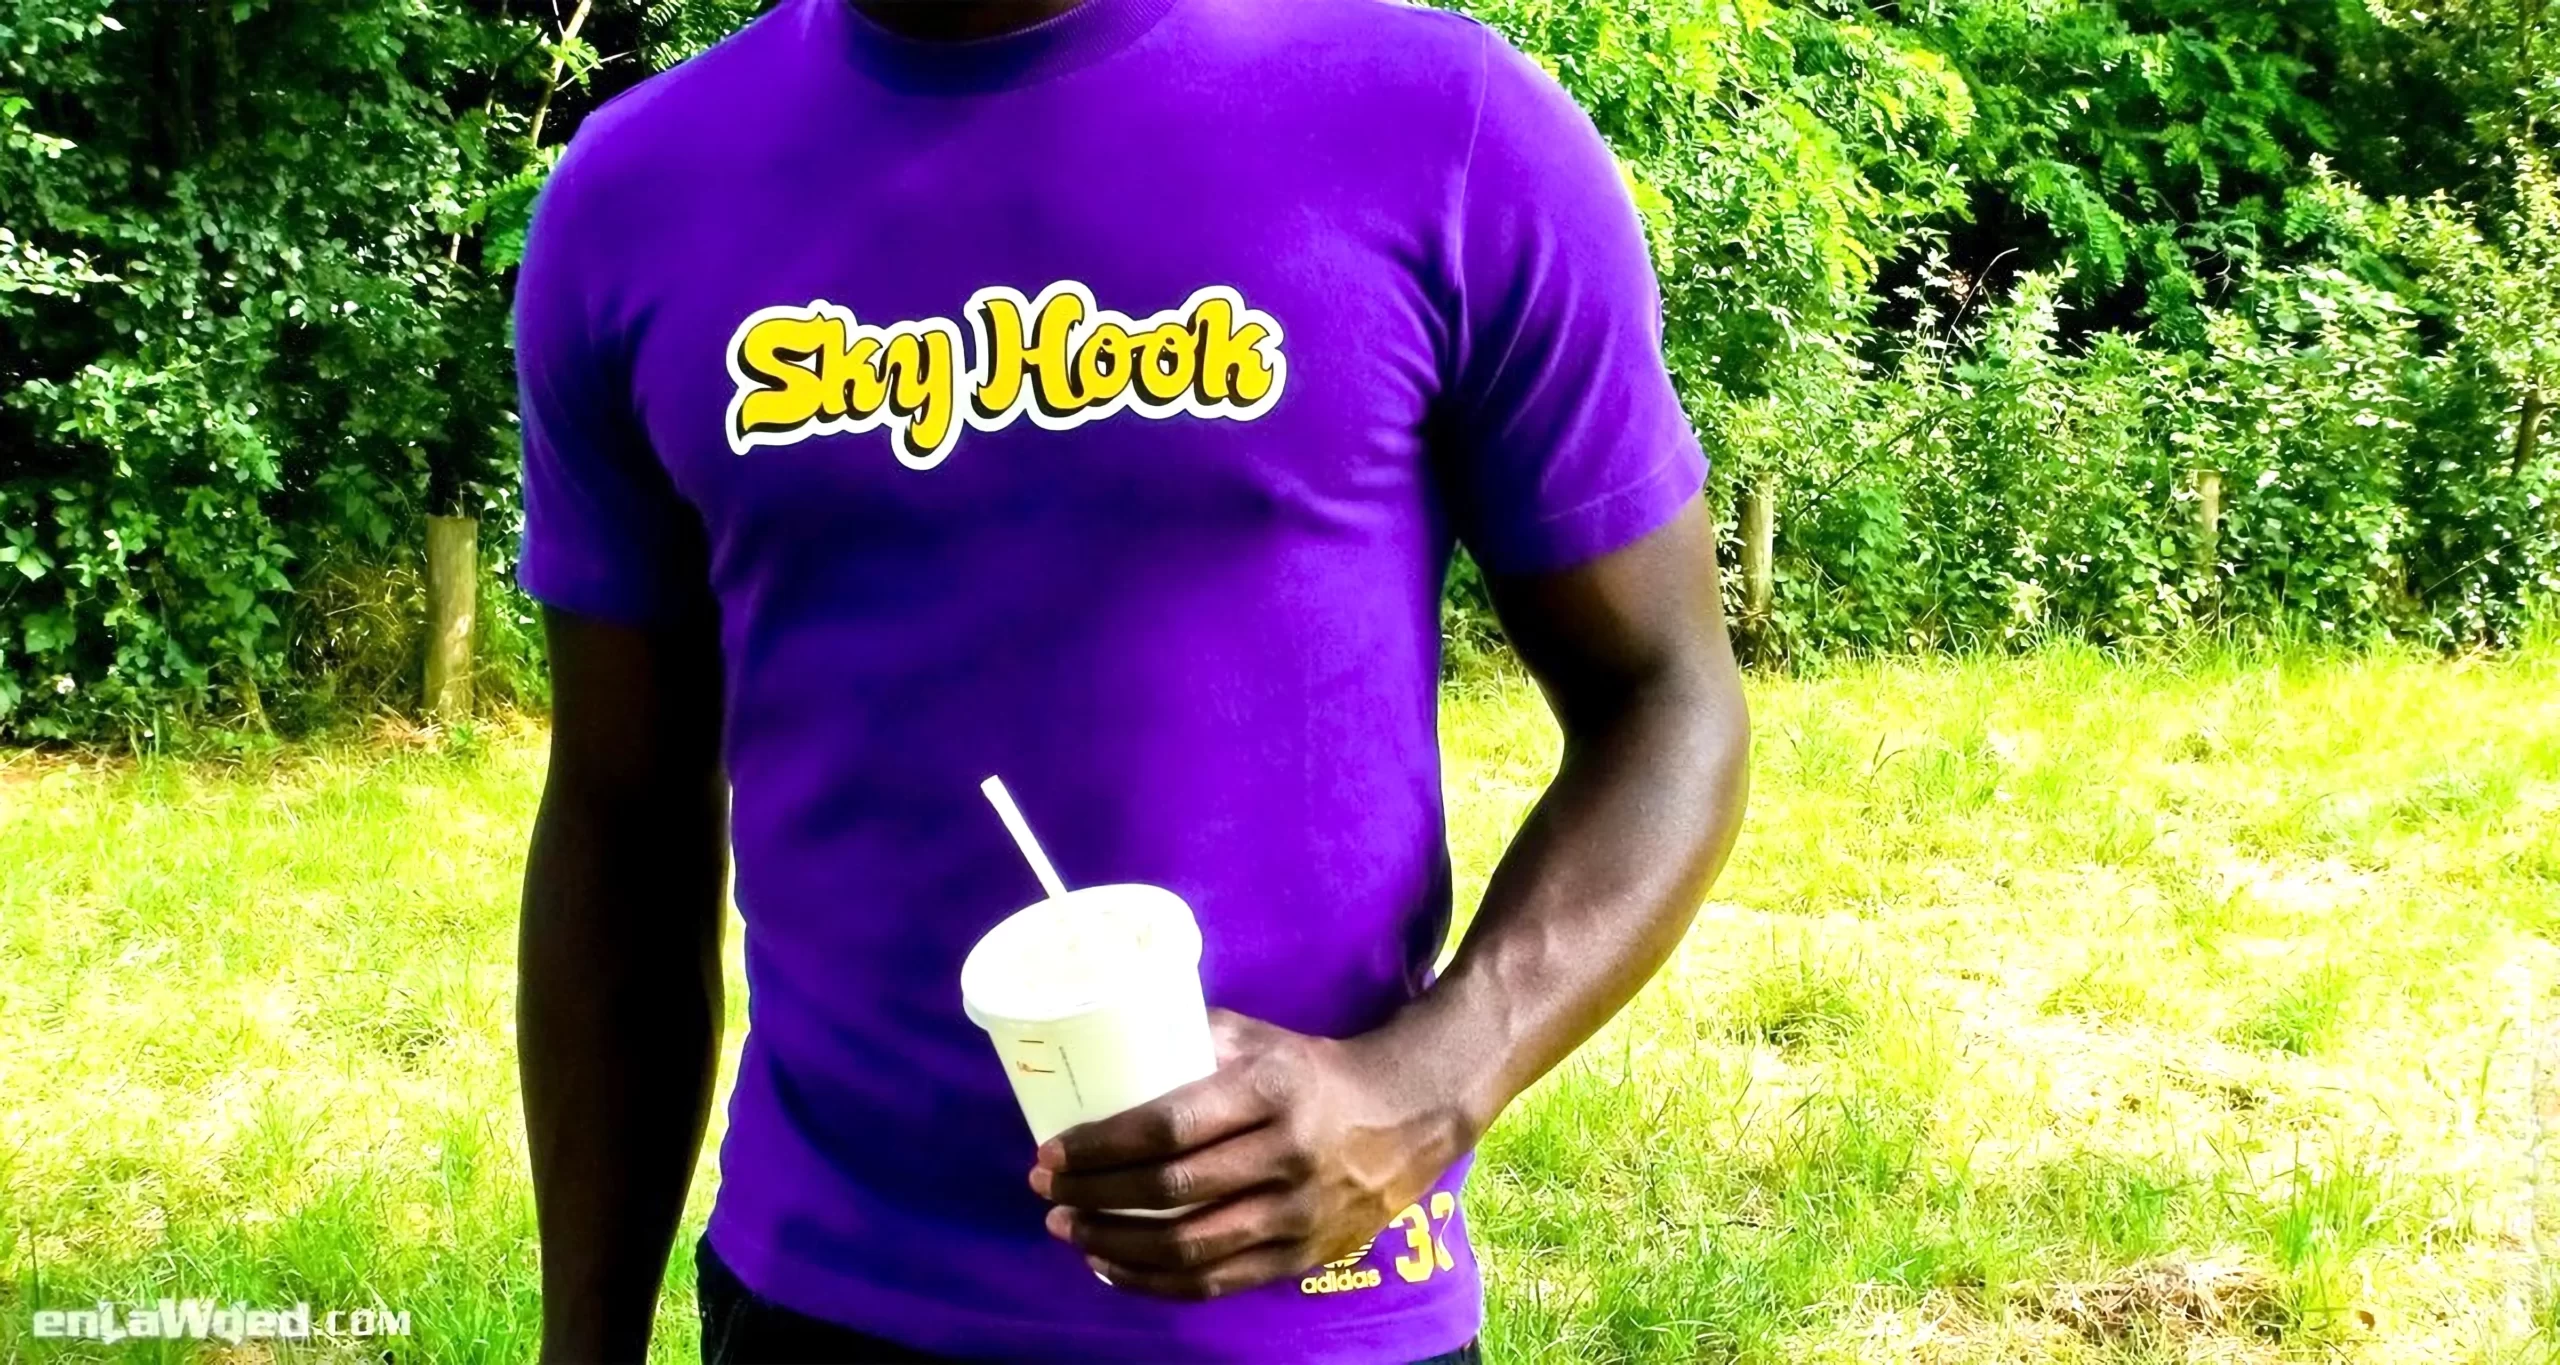 Men’s 2004 SkyHook Lakers #33 T-Shirt by Adidas: Unburdened (EnLawded.com file #lmchk90347ip2y124407kg9st)